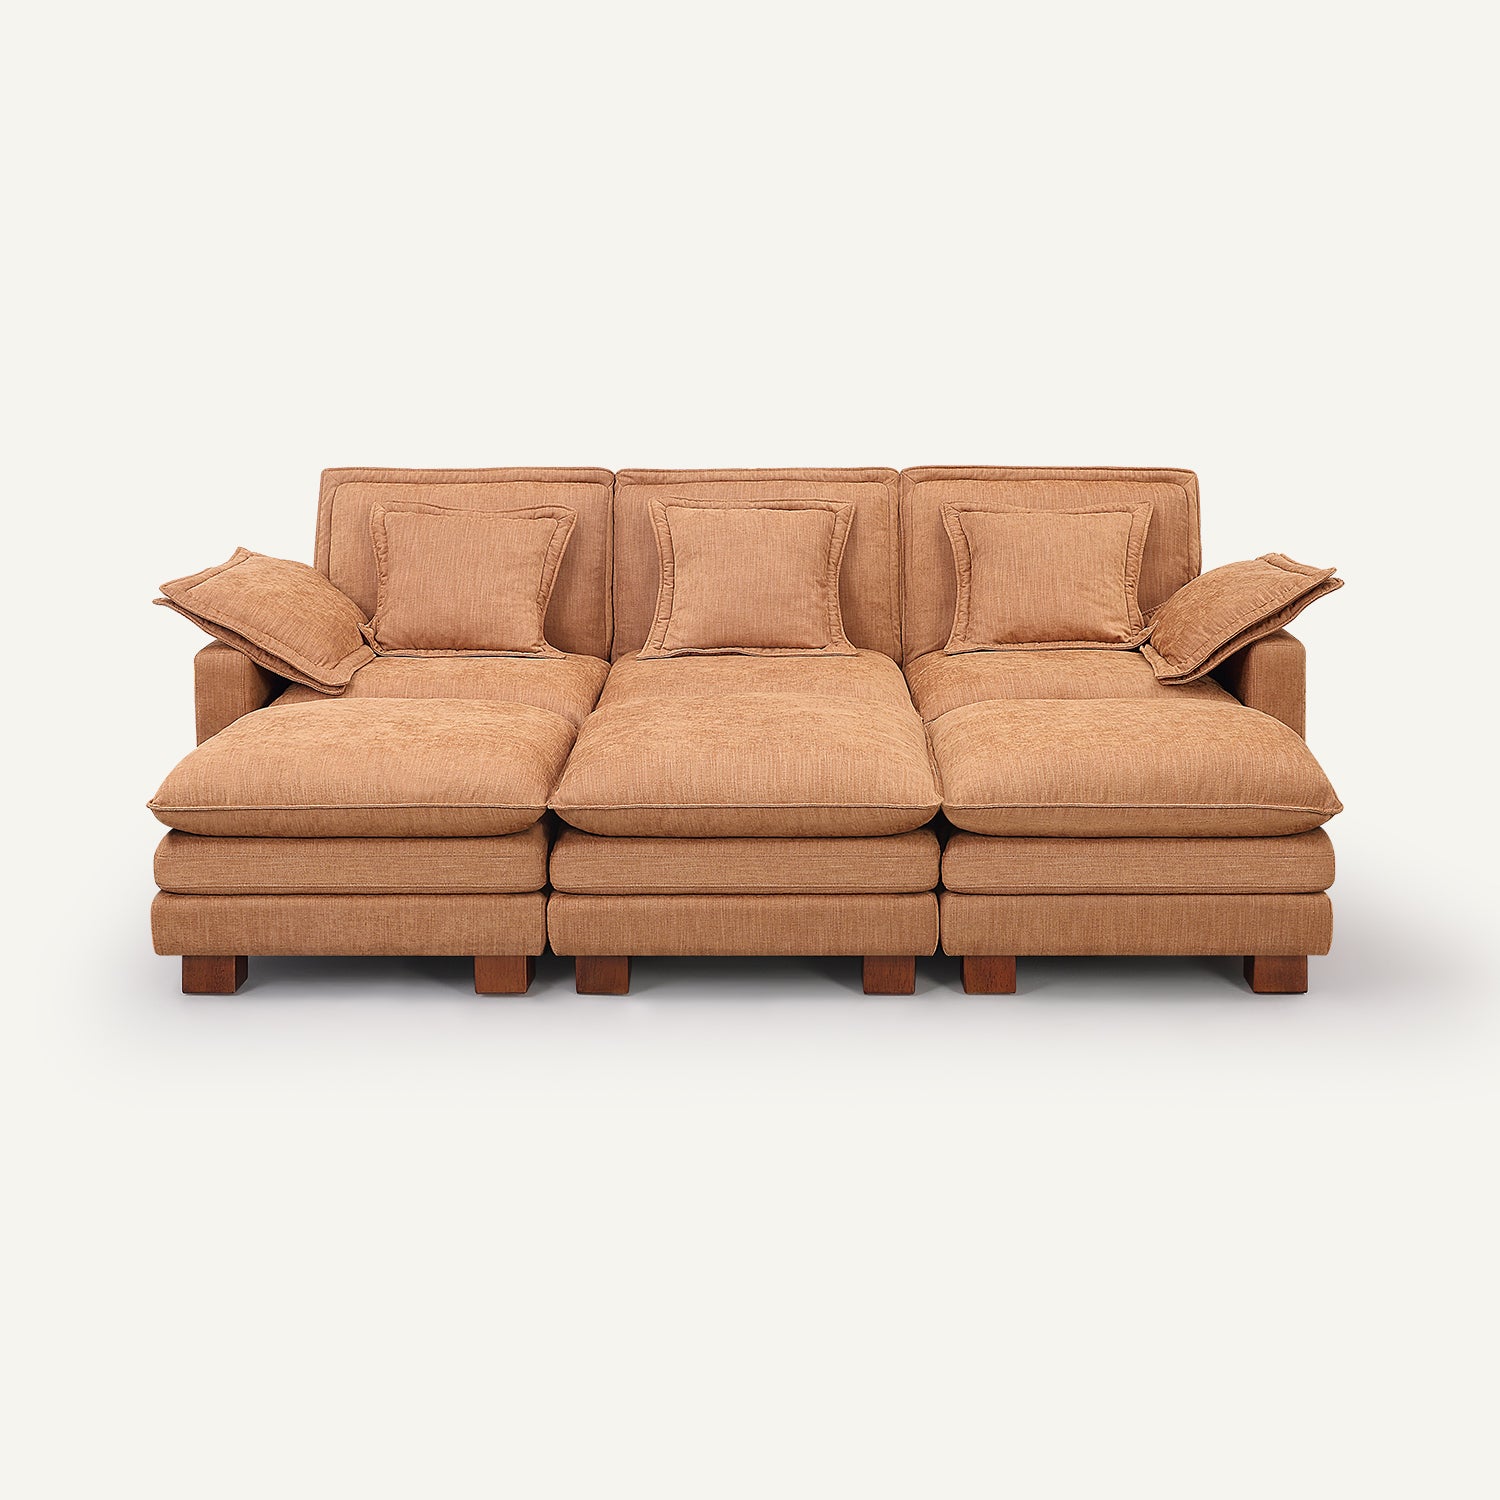 Stacked Tan Linen 3-Seat Modular Sofa Bed